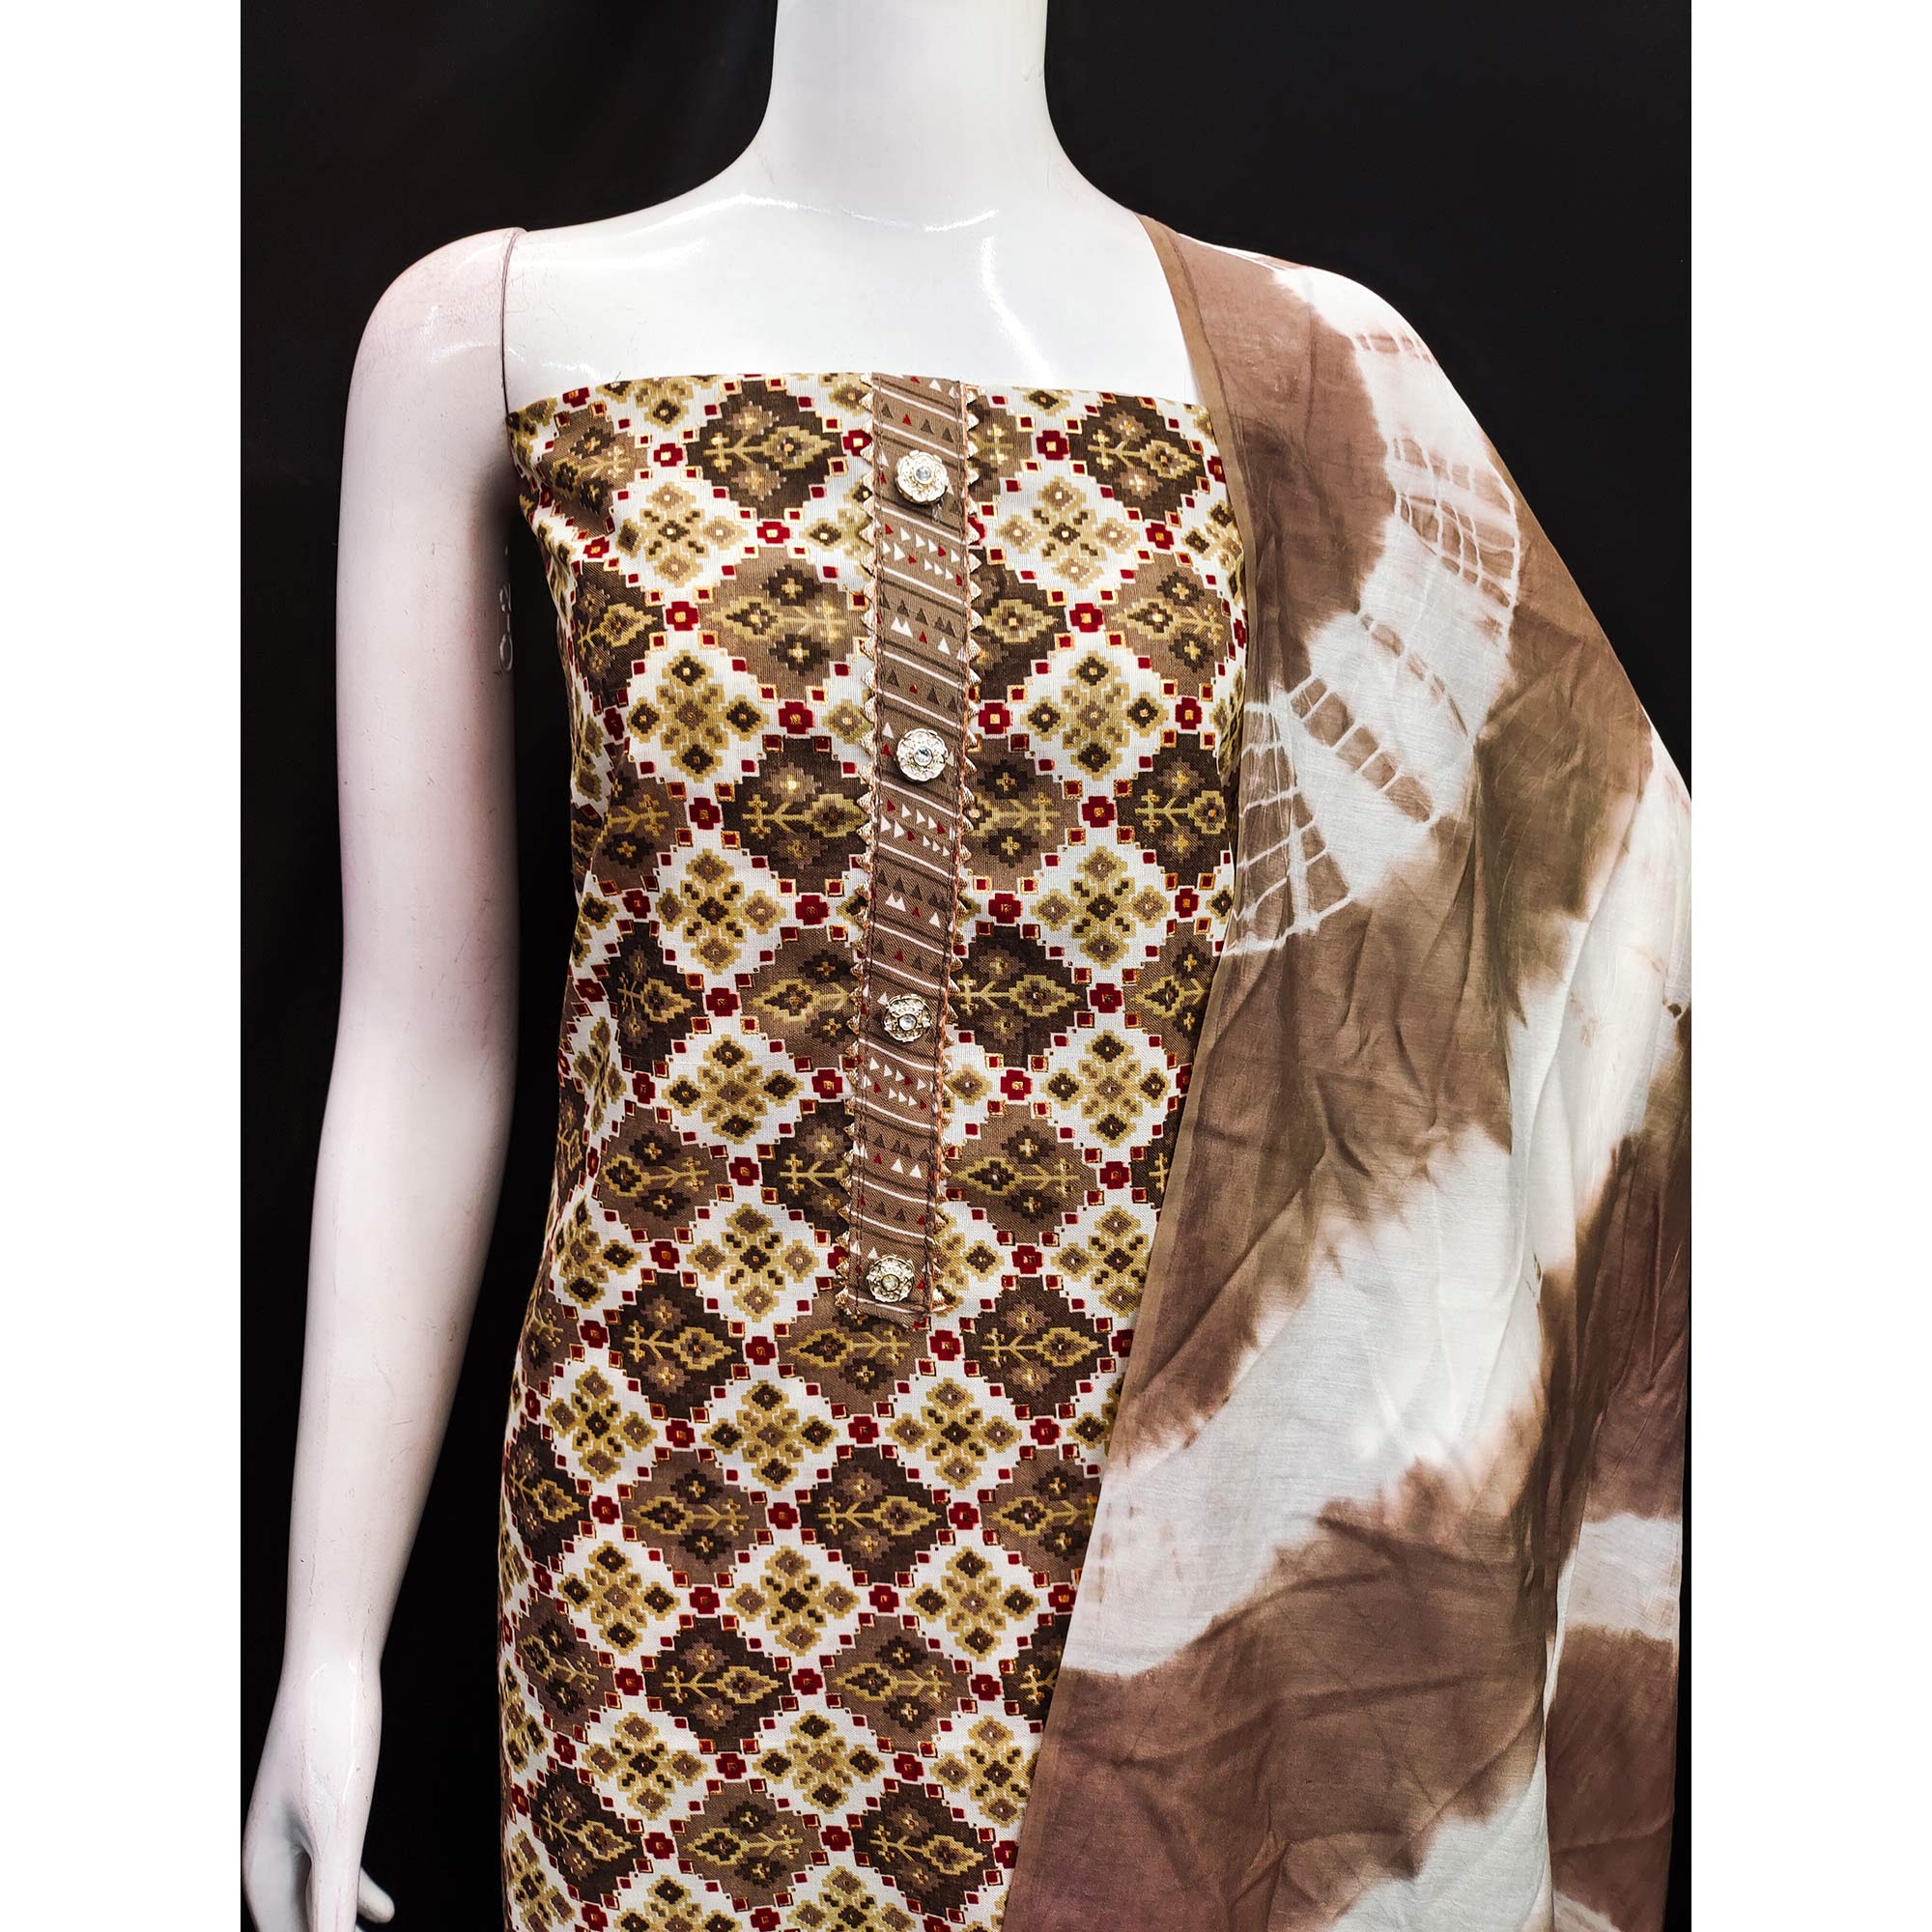 Brown Foil Printed Cotton Blend Dress Material